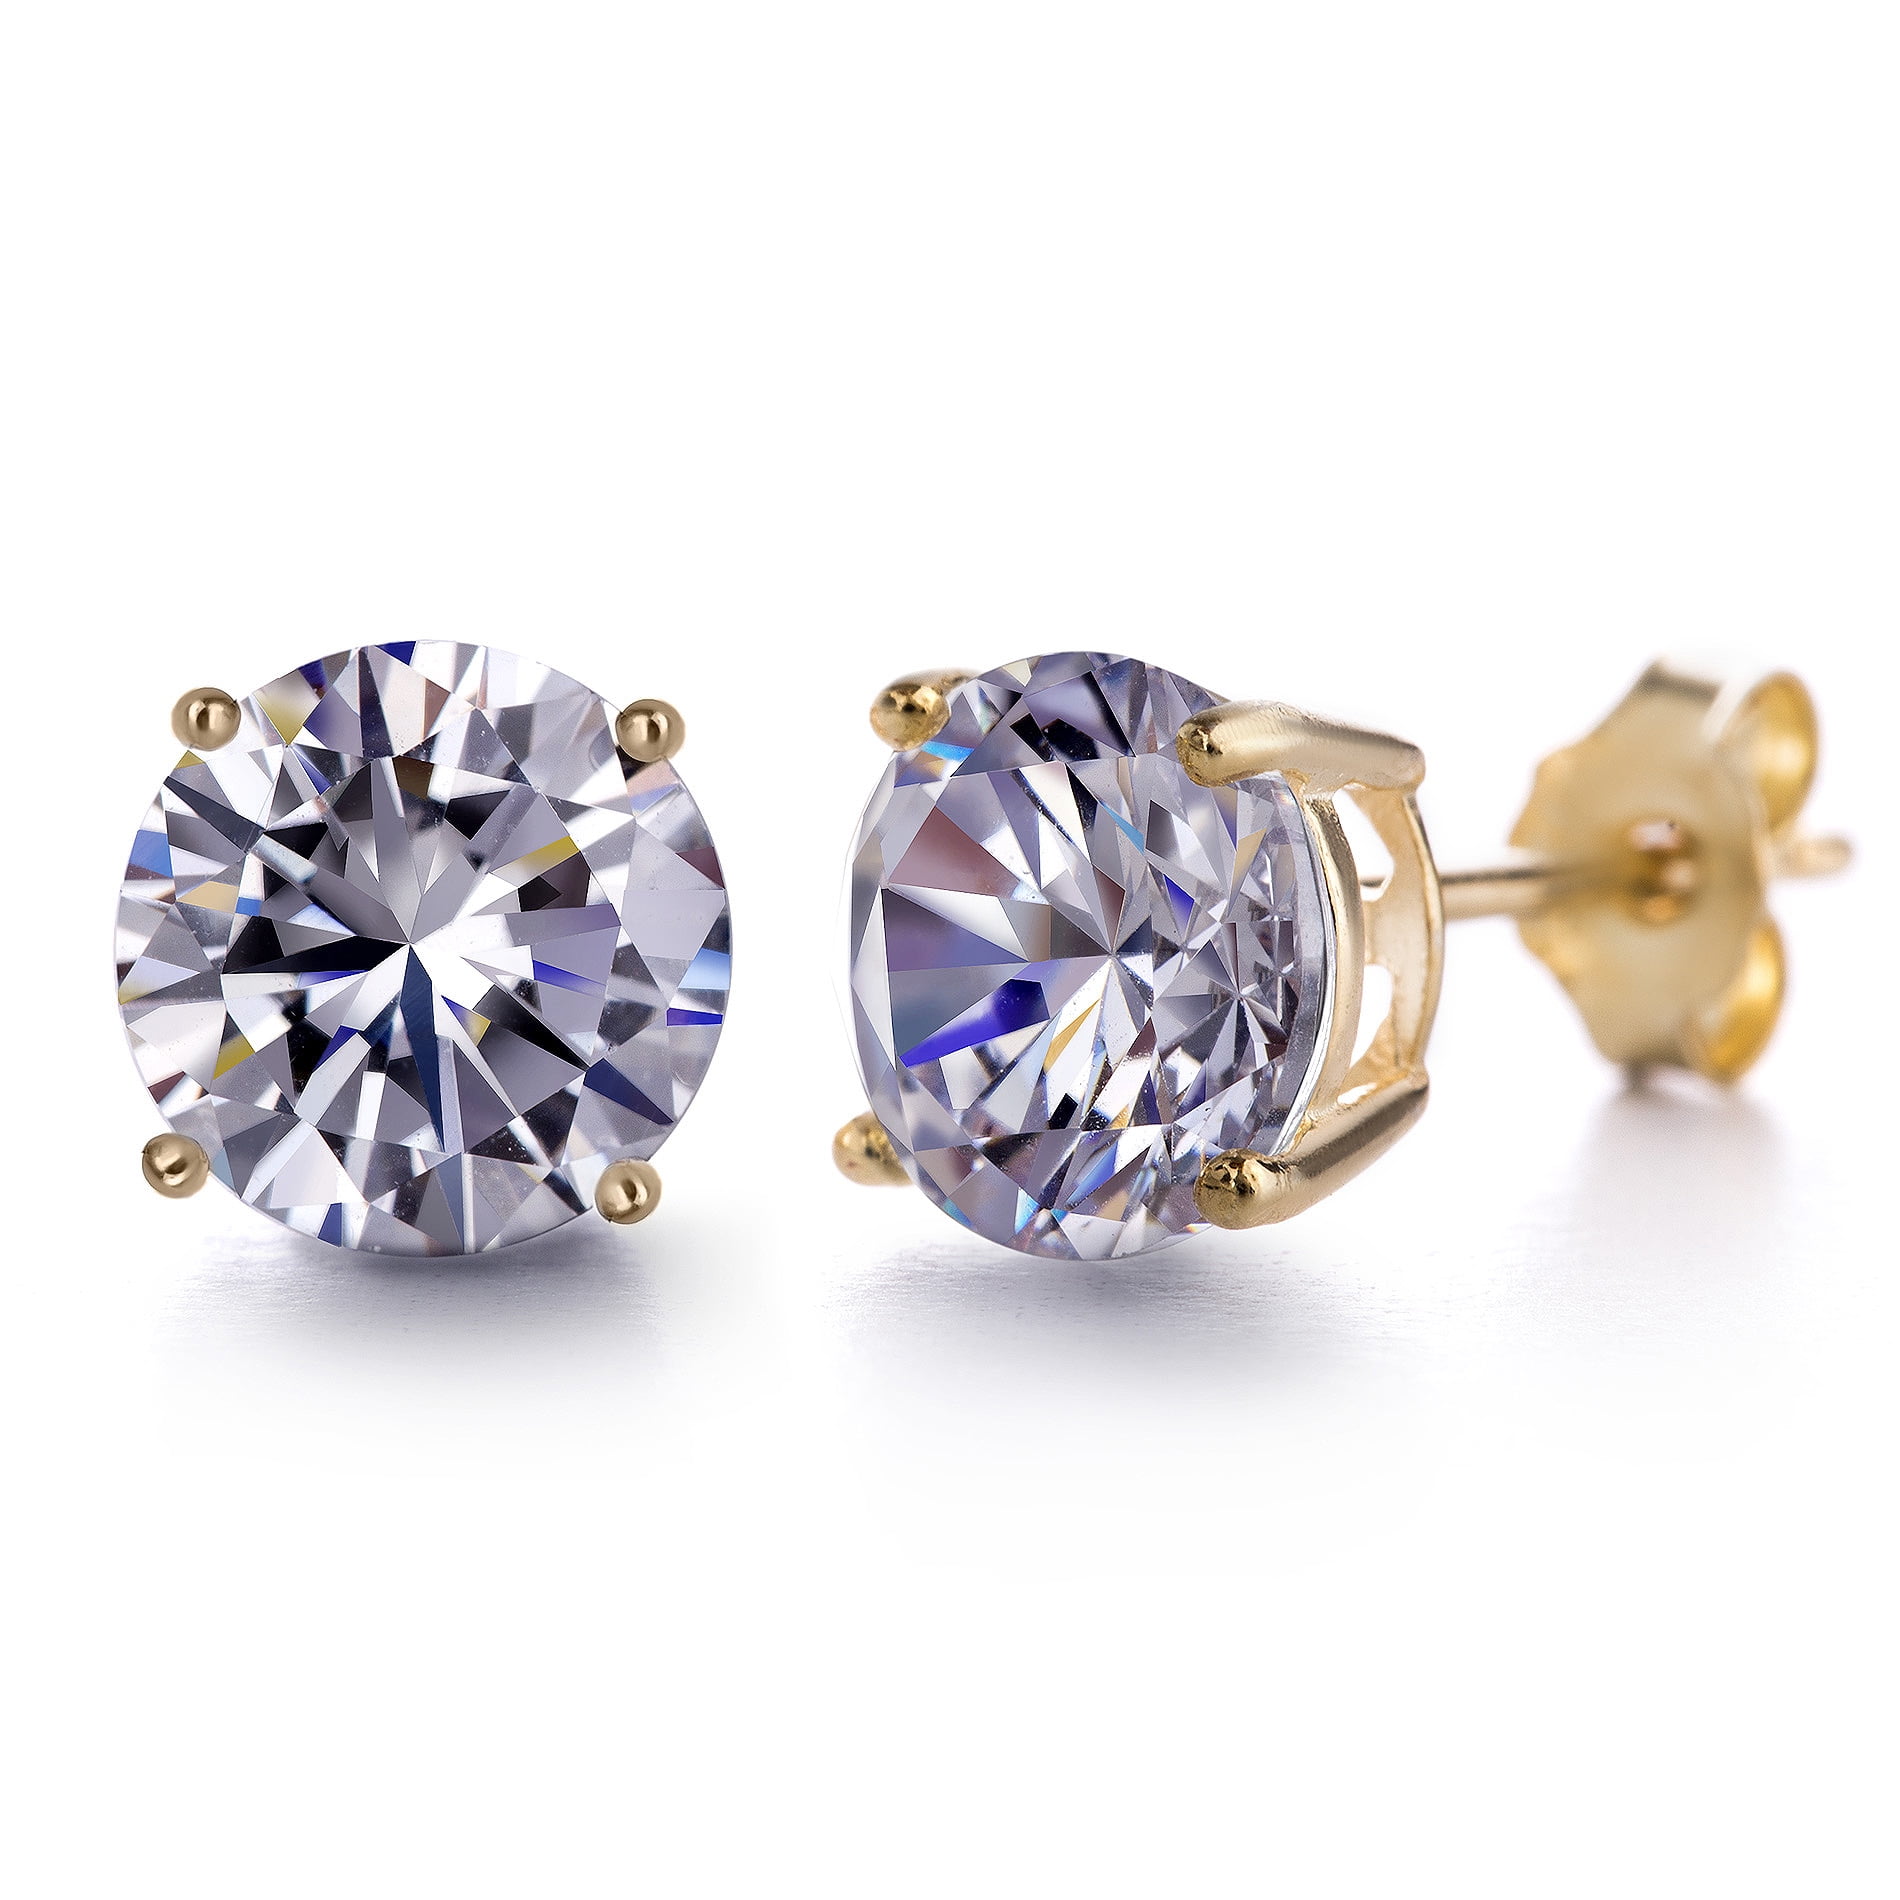 Details about   Solid 14k Gold Multi-Gemstone Stud Earrings 